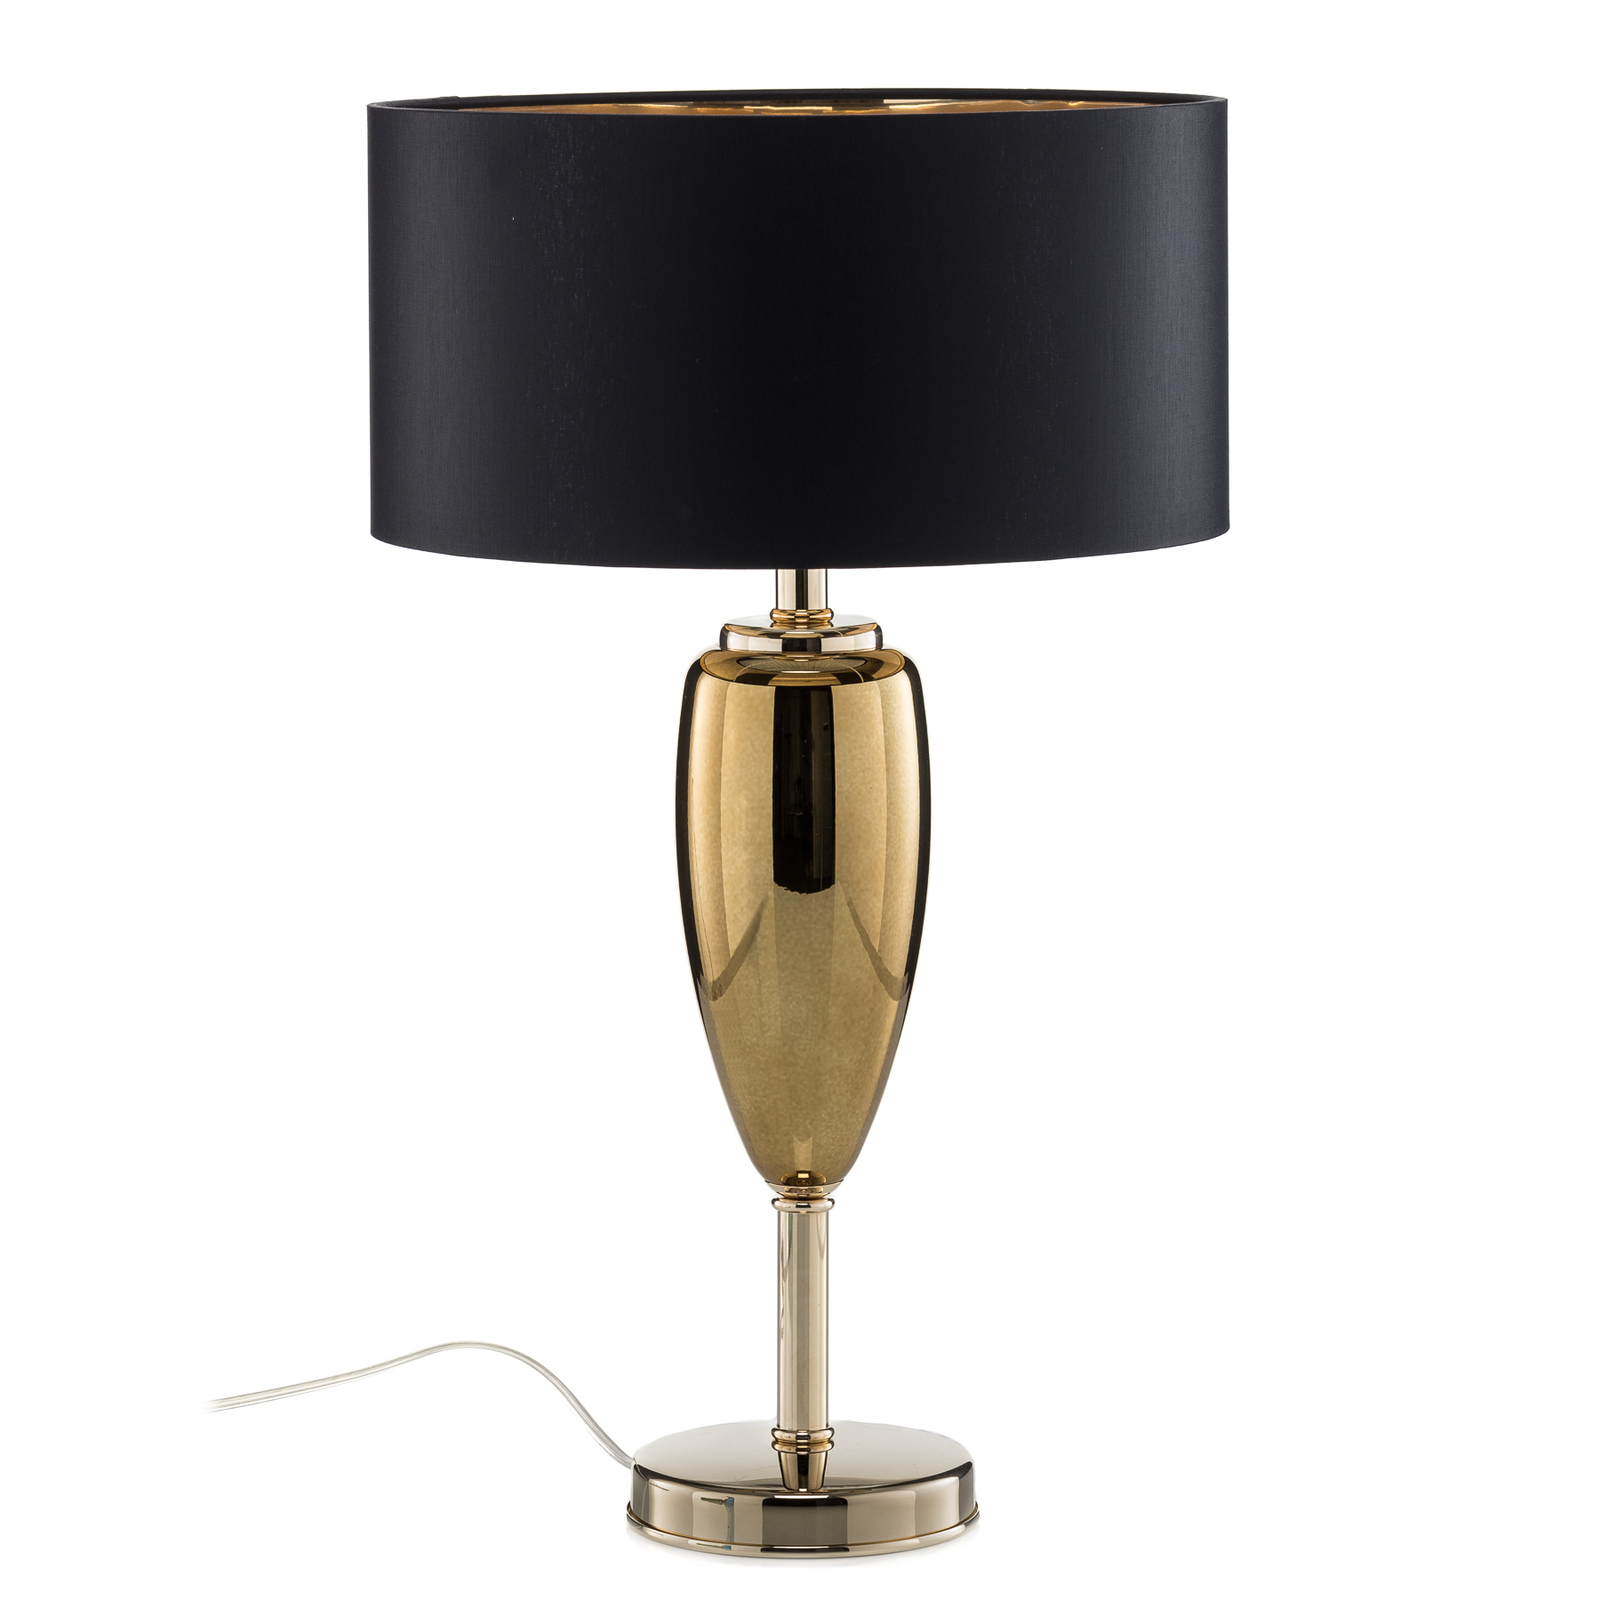 Show Ogiva - lampe à poser textile noir et or